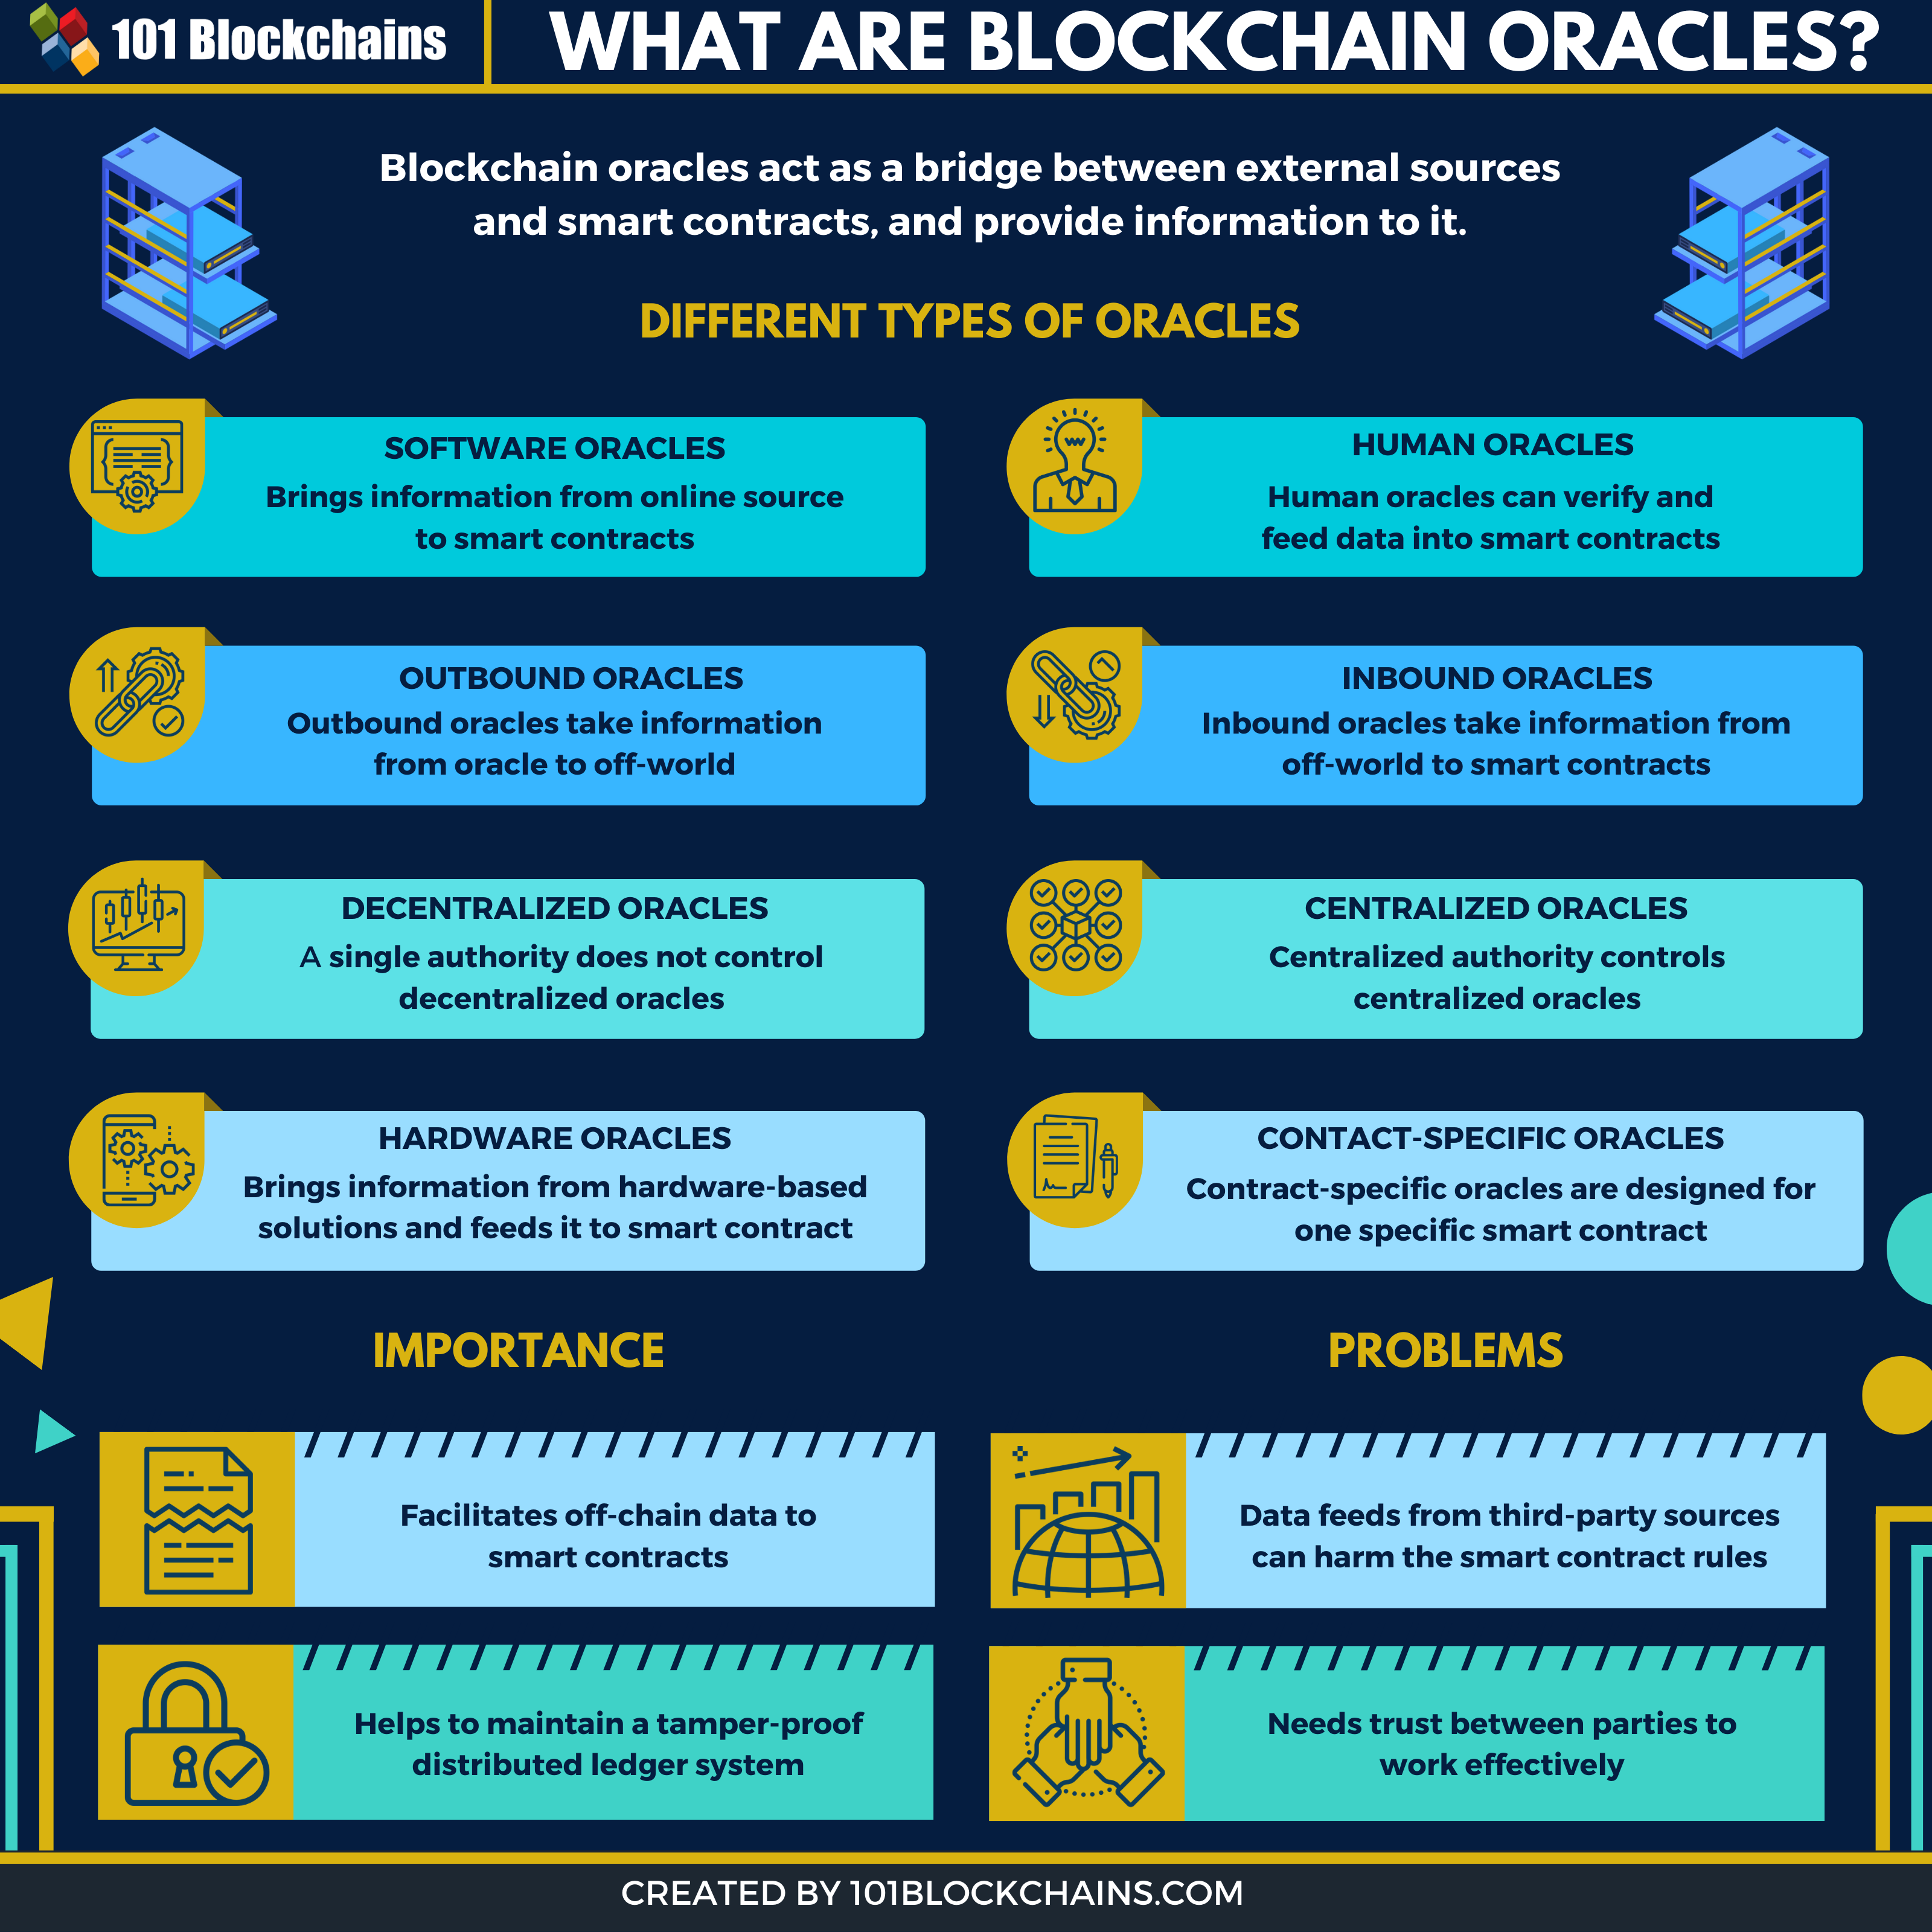 Blockchain oracles